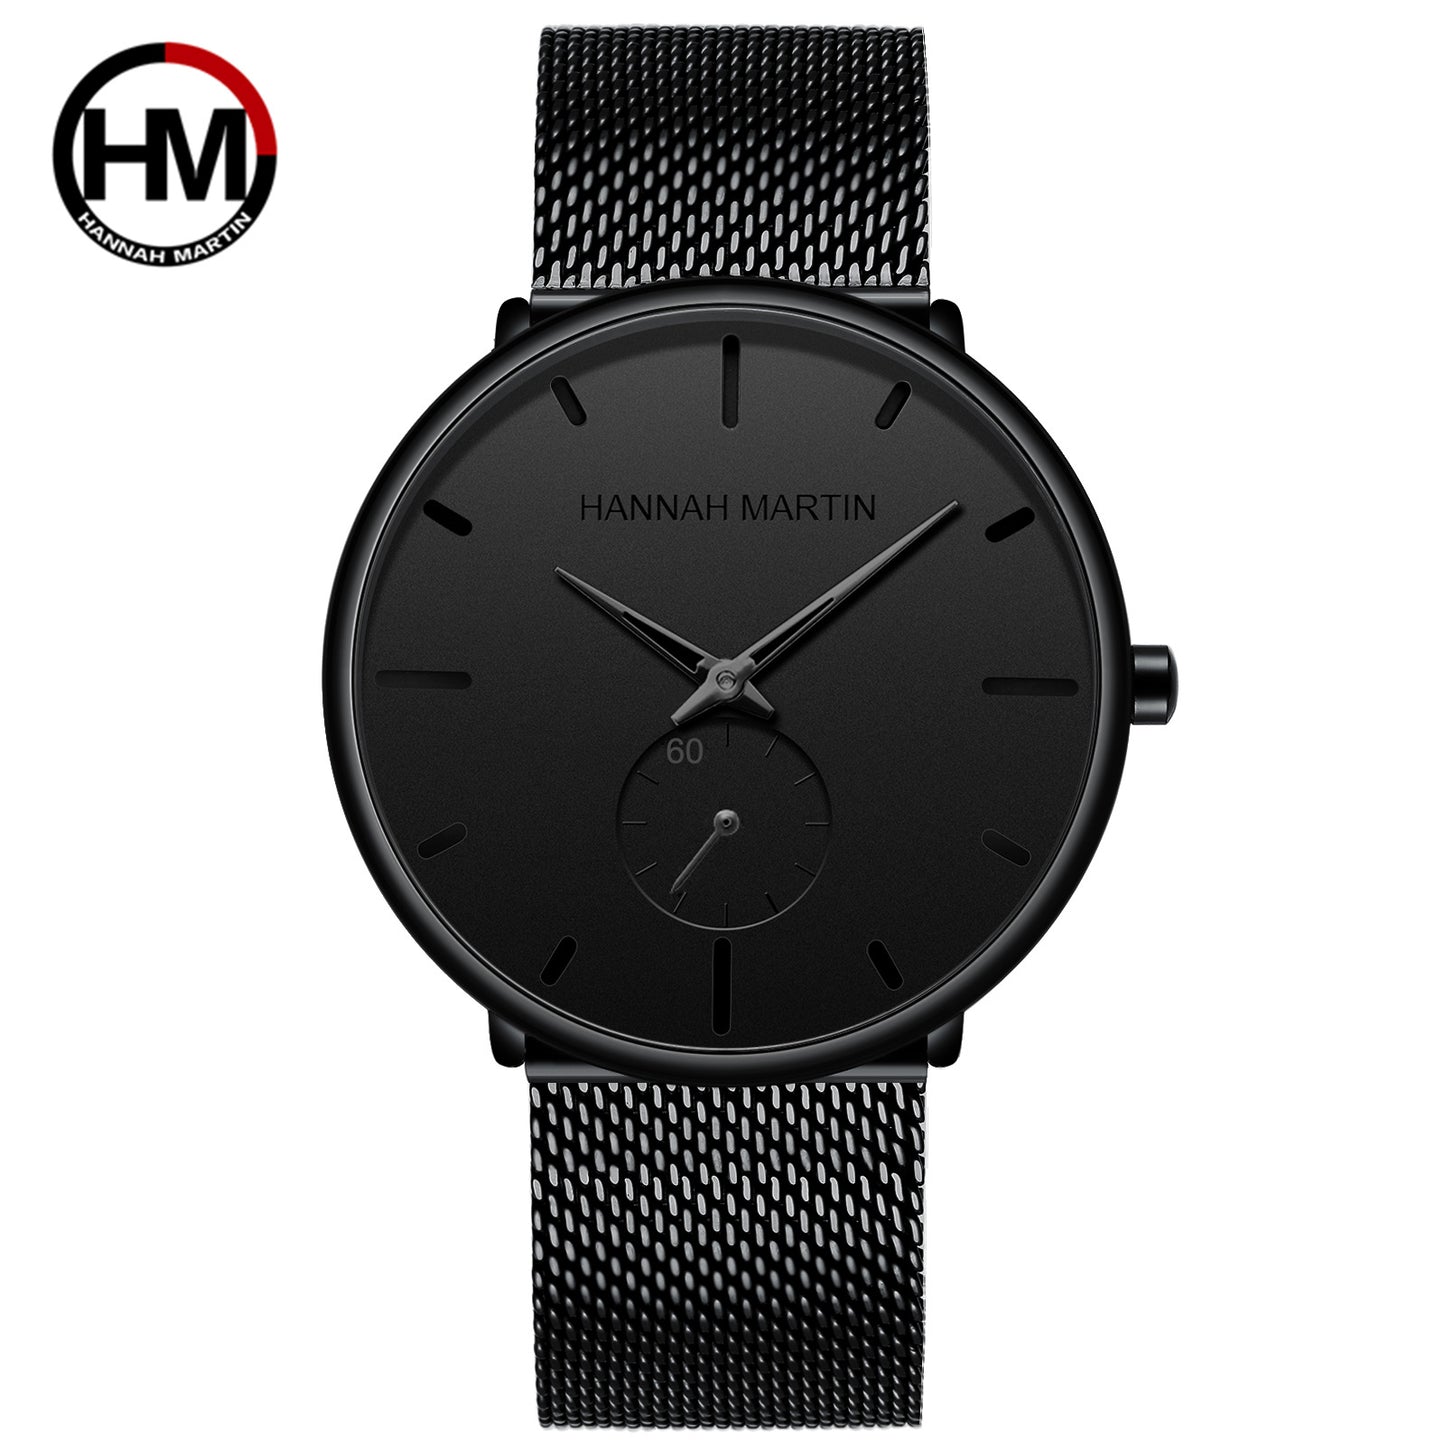 Black waterproof watch Hot personality fashion popular student men's quartz watch